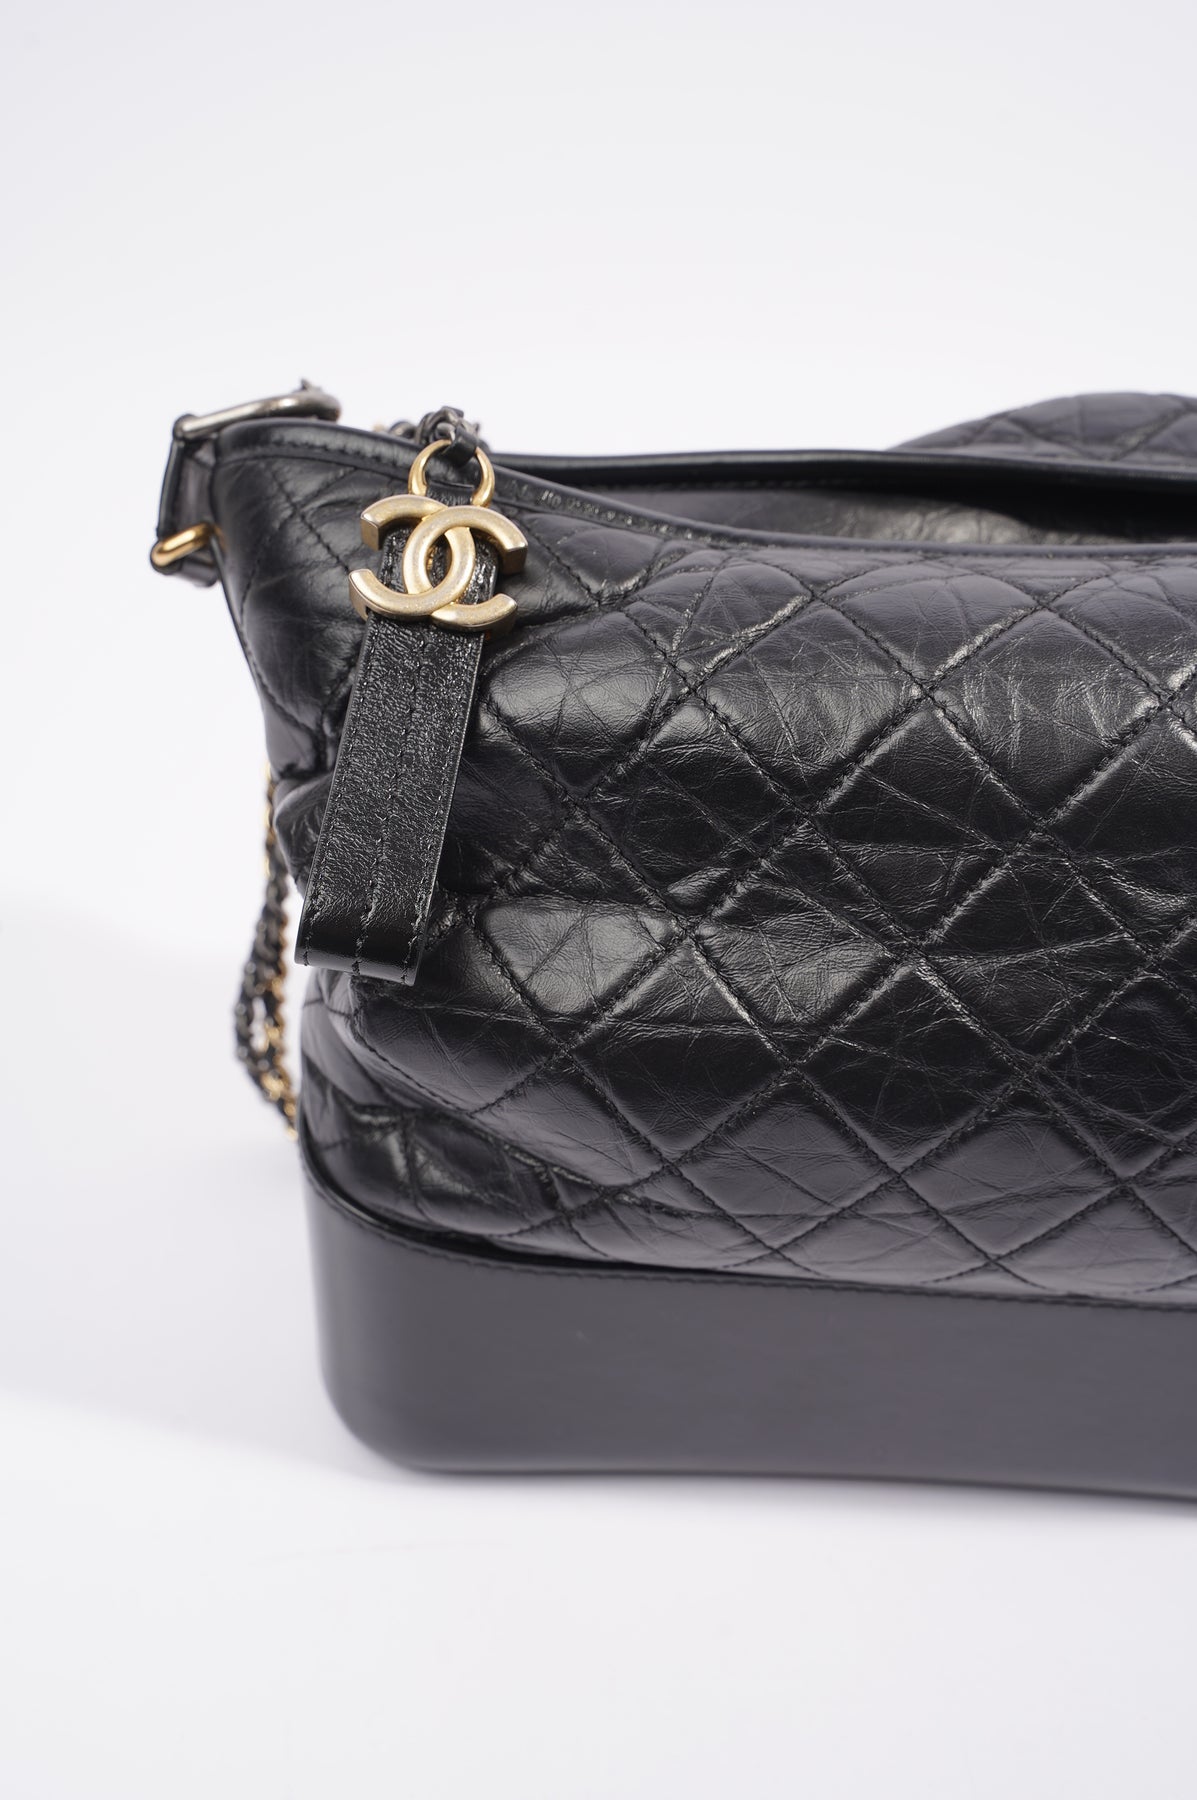 Chanel State Of The Art Hobo Bag